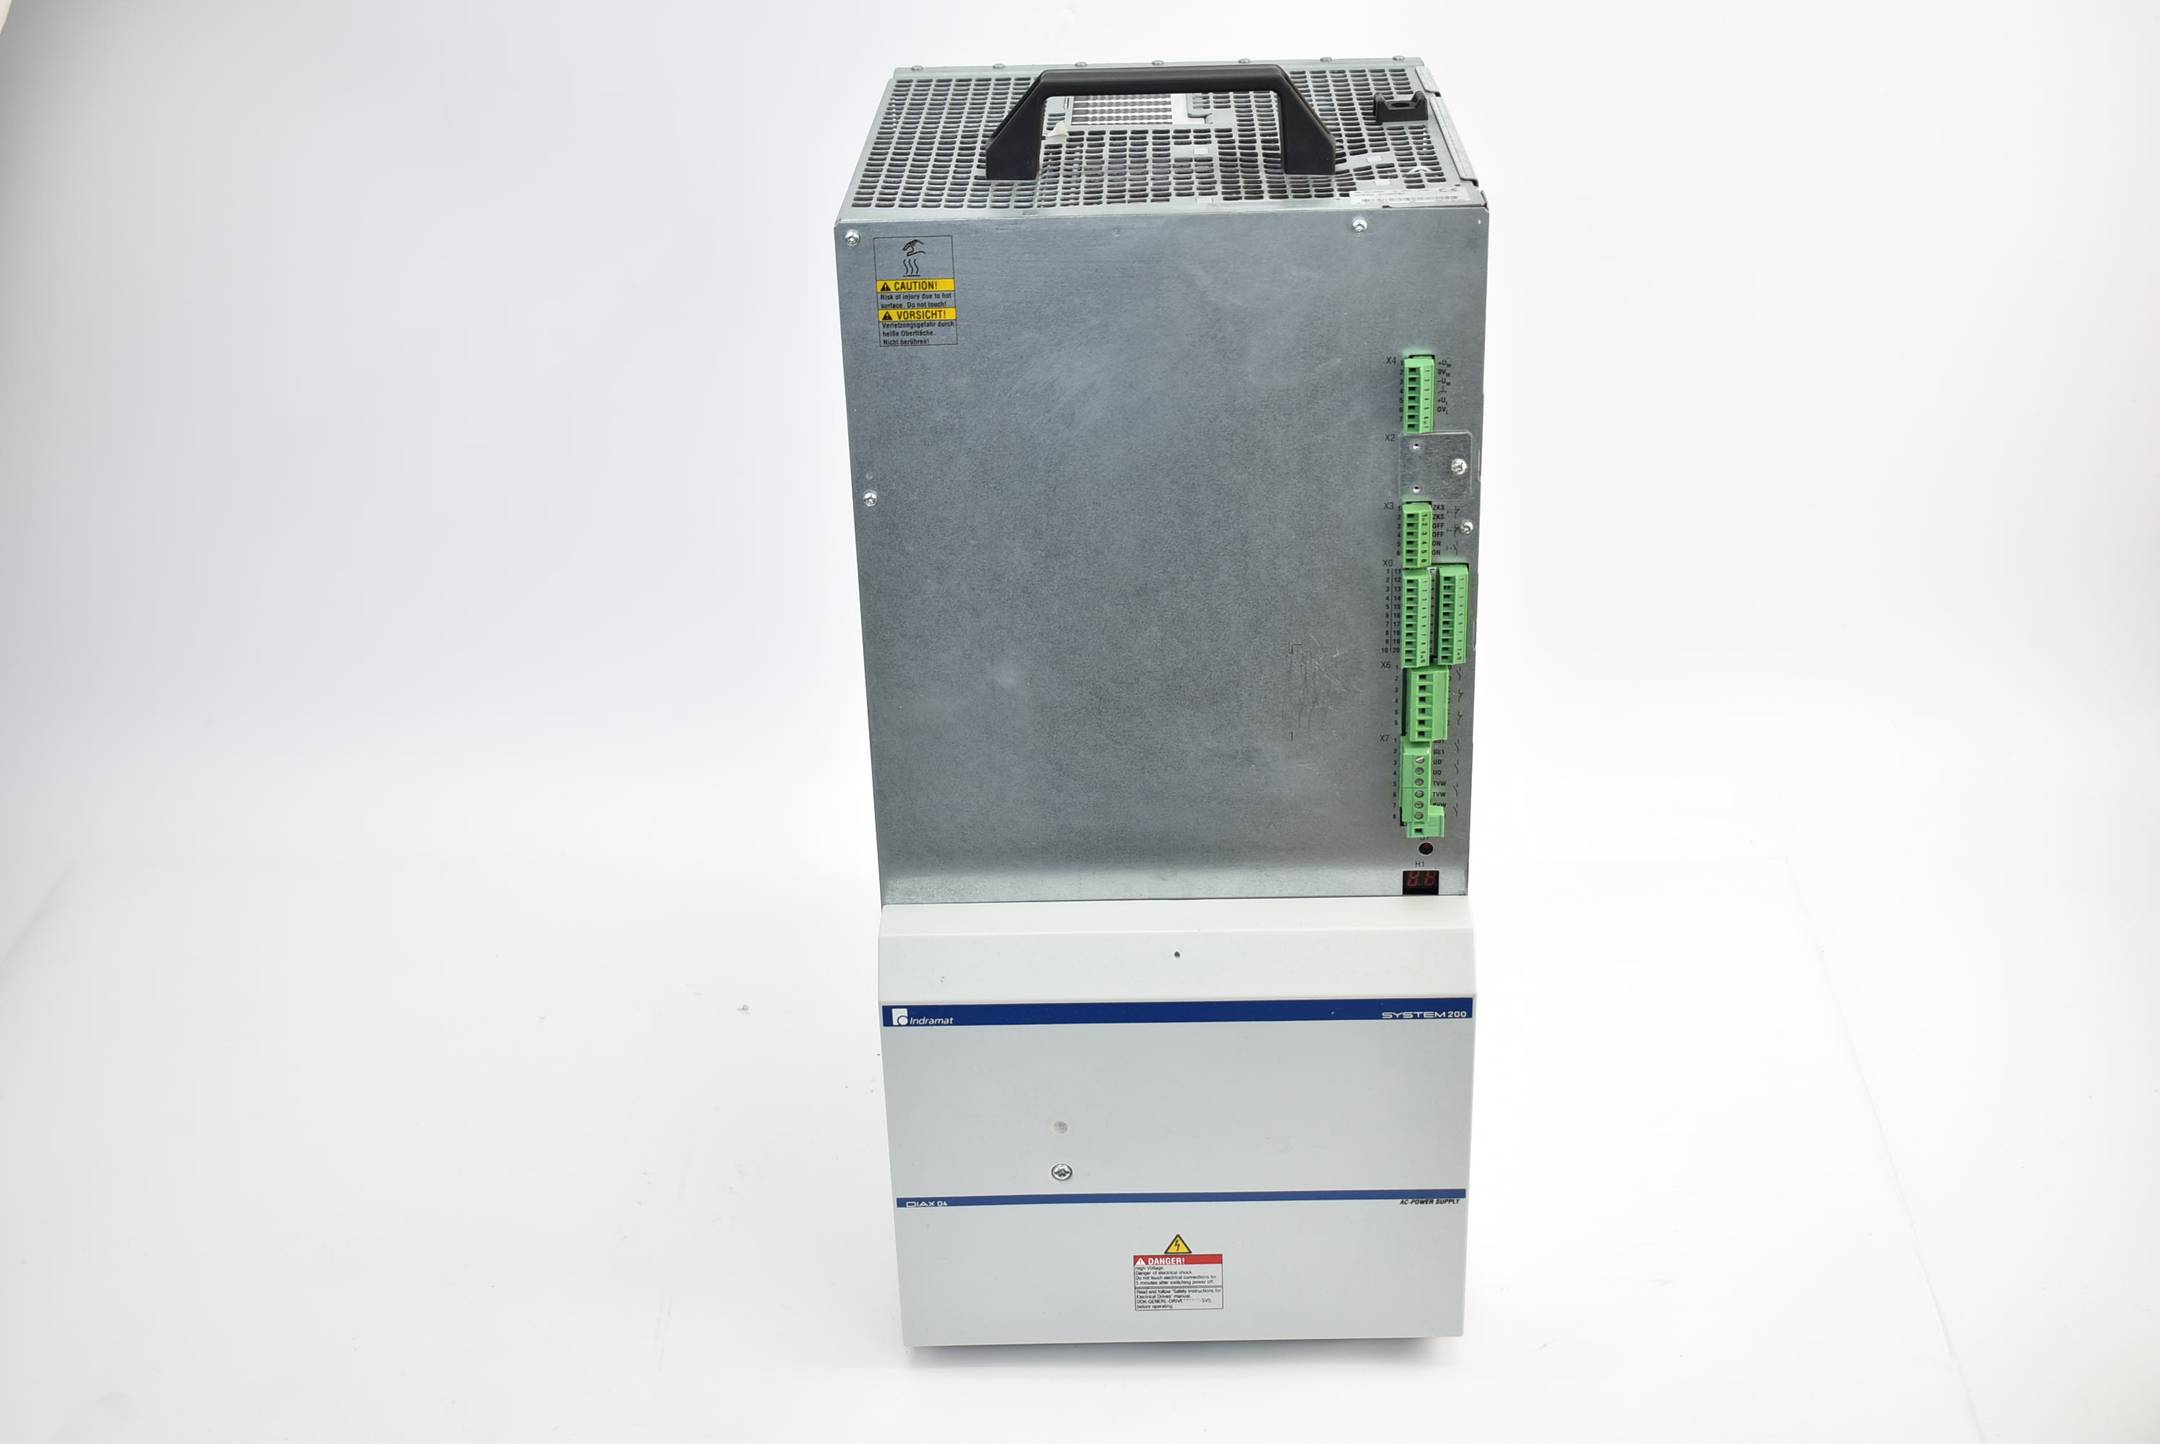 Rexroth AC-Power Supply HVE04.2-W075N